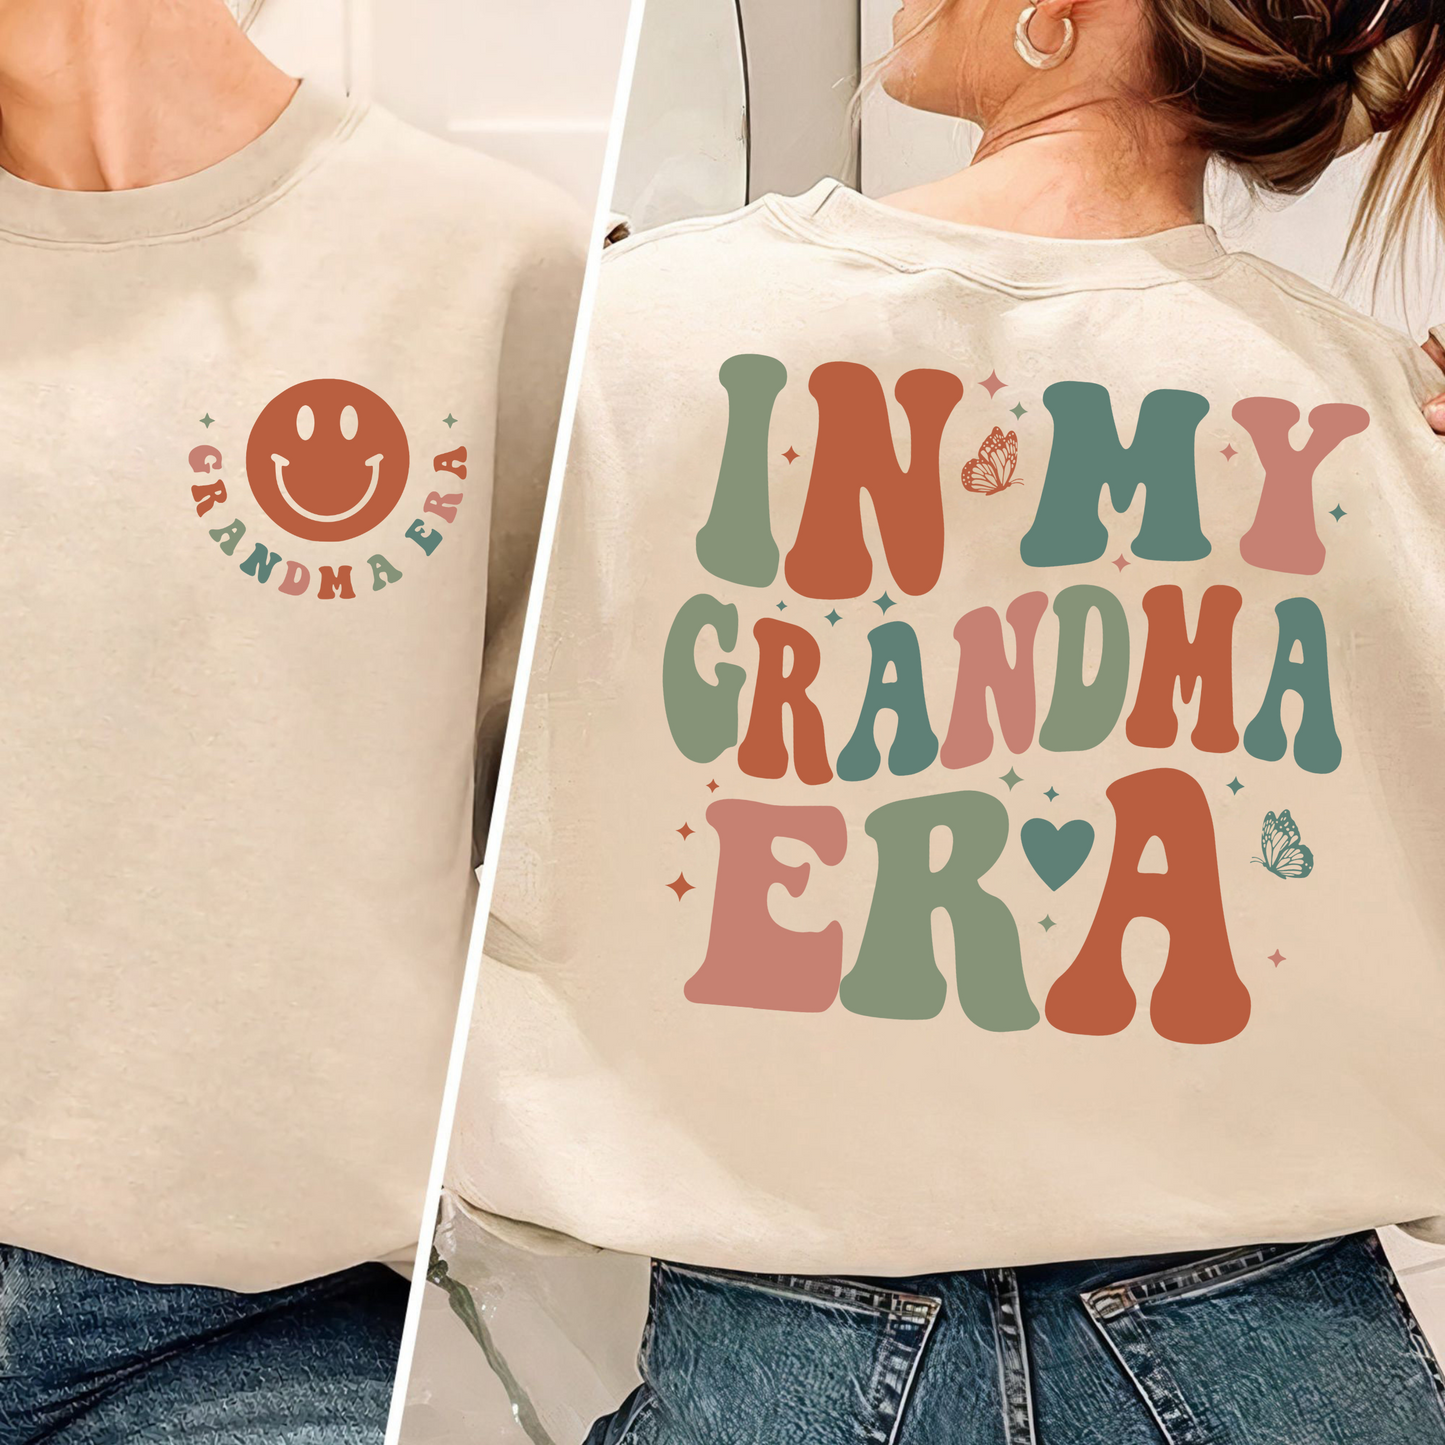 Grandma's Era Starts - Heartfelt Mother's Day Present